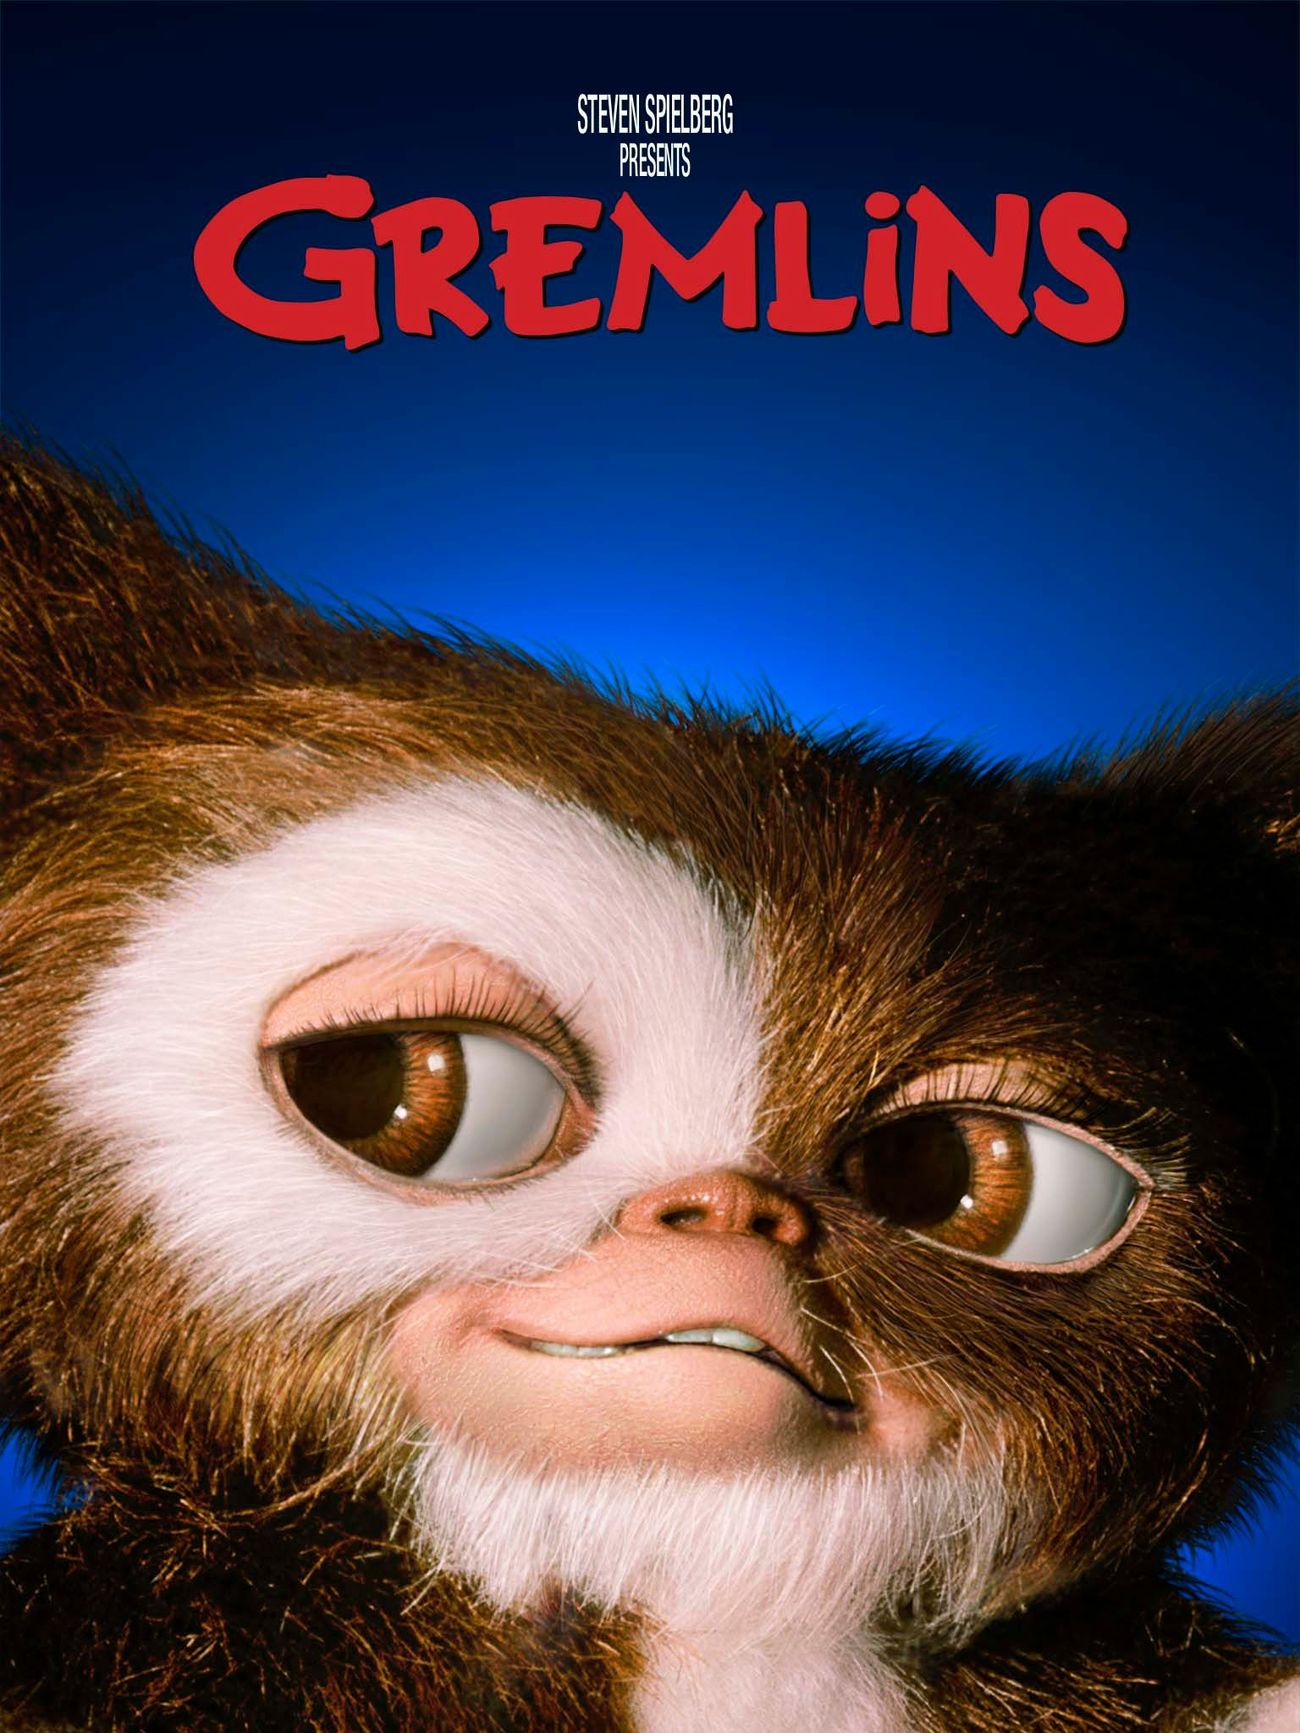 Gremlins : Film Fantastique Pour Enfants Au Cinéma En 1984 tout Gremlins Noel